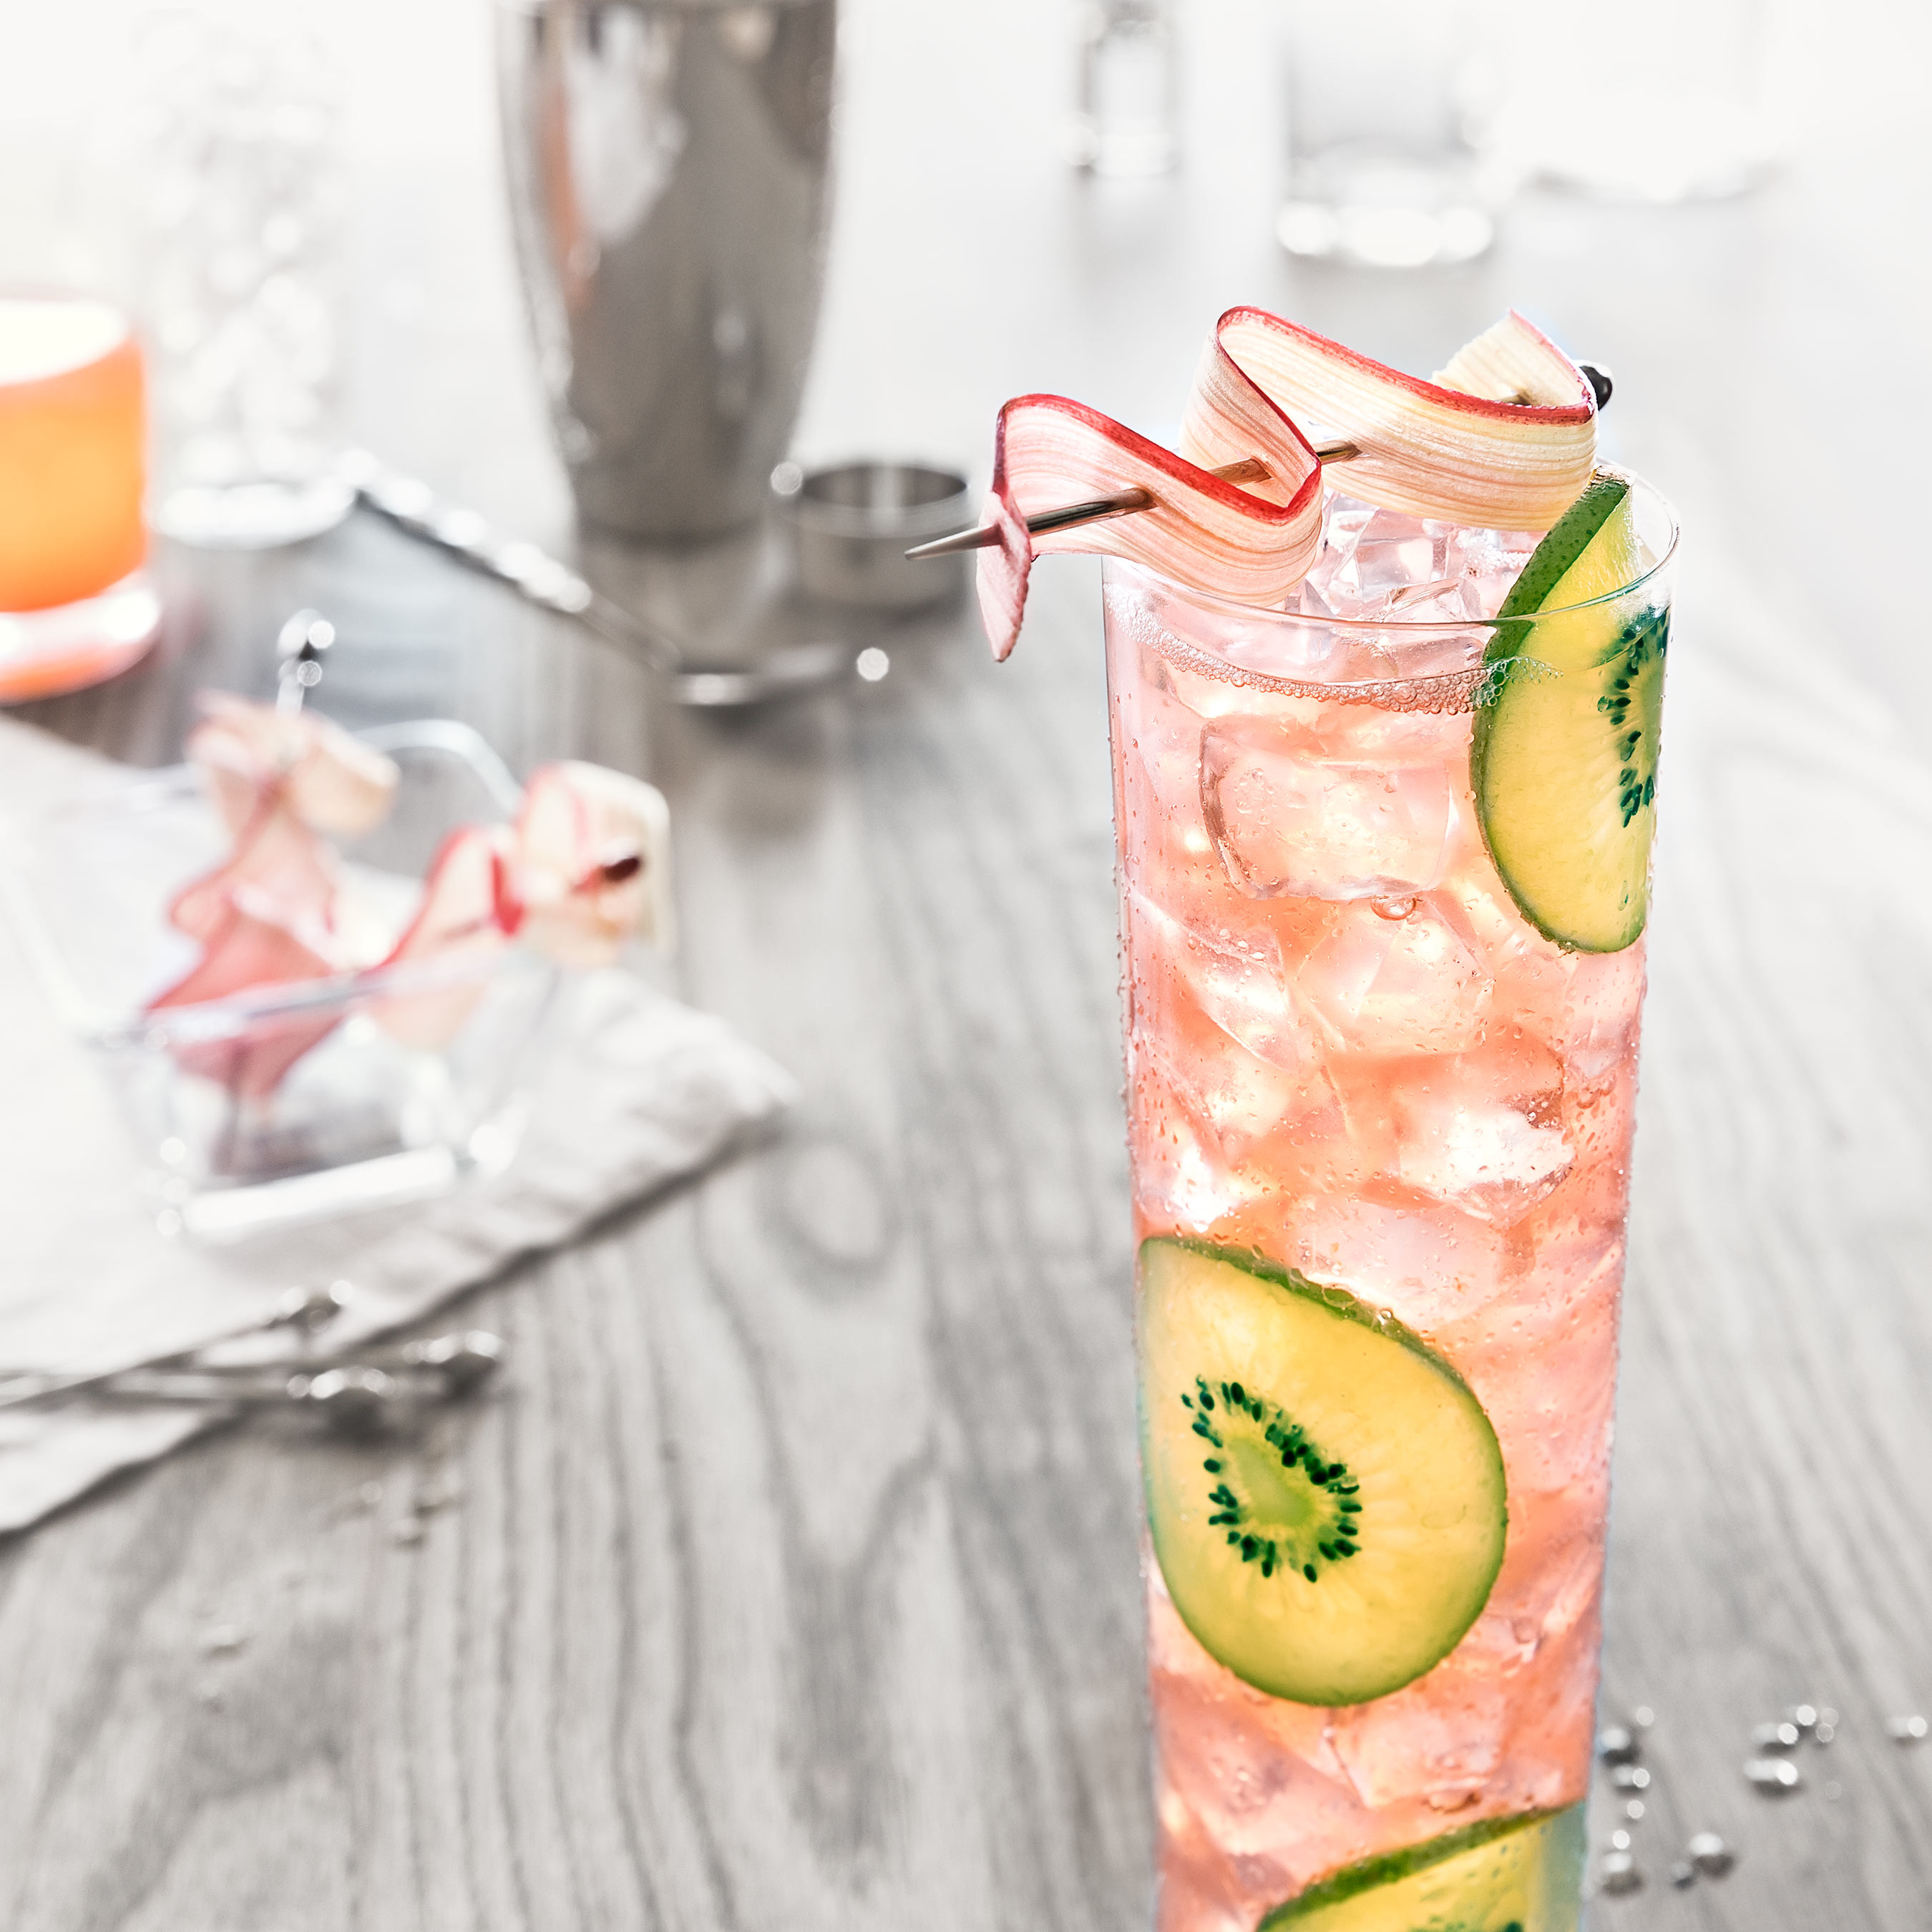 Glanger Photography | Rhubarb Cocktail with sliced Kiwi